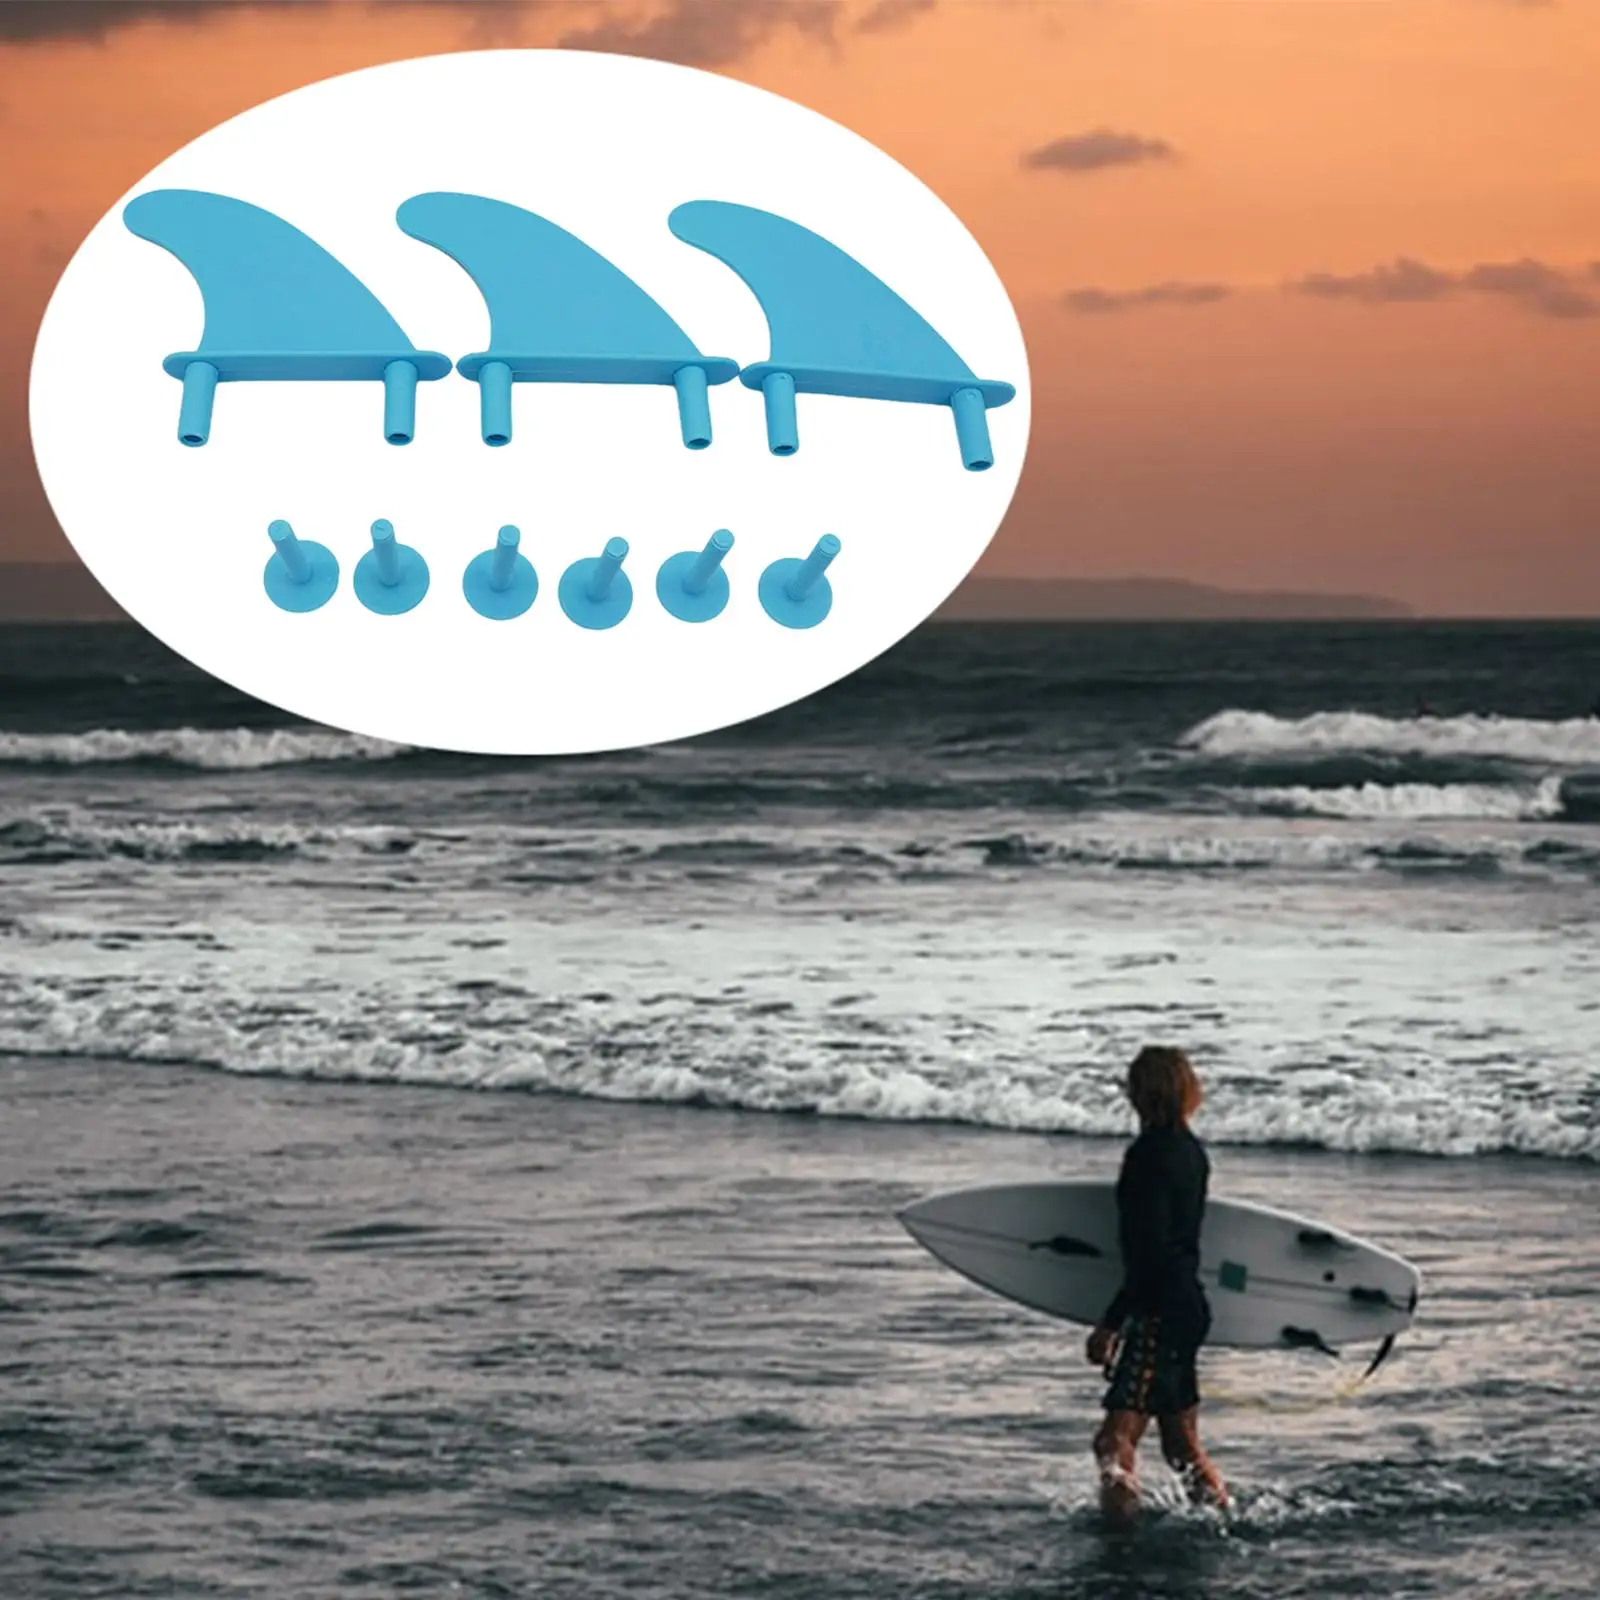 3x Soft Top Surfboard Fins Thruster Fins Outdoor Paddleboard Foam Surf Board